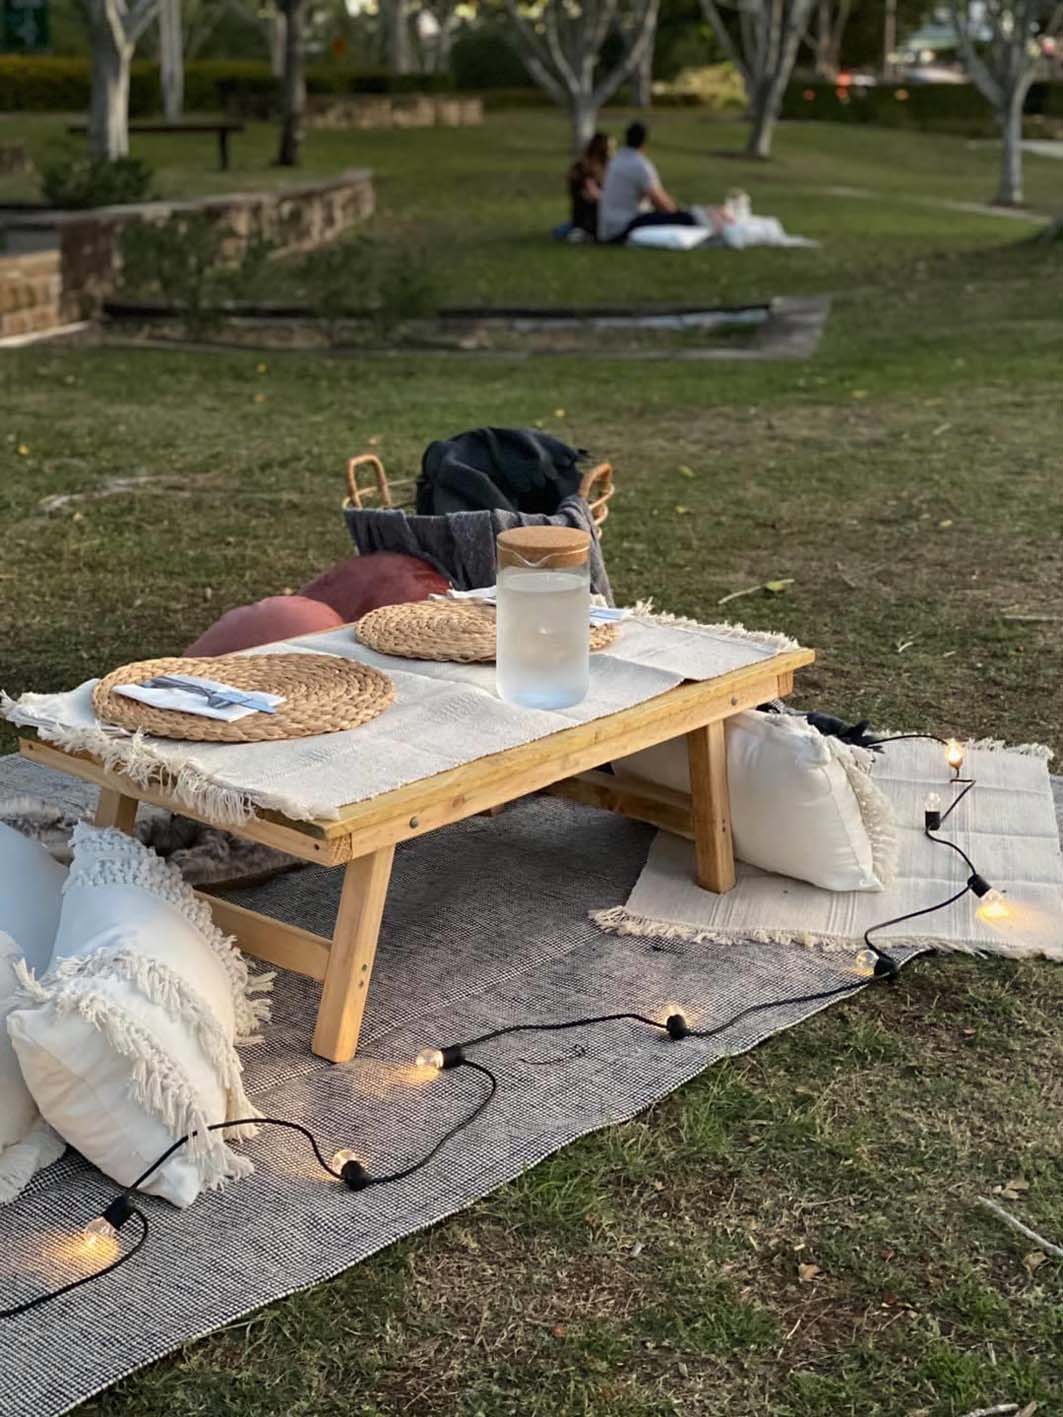 Sip 'n' Dip paint and picnic